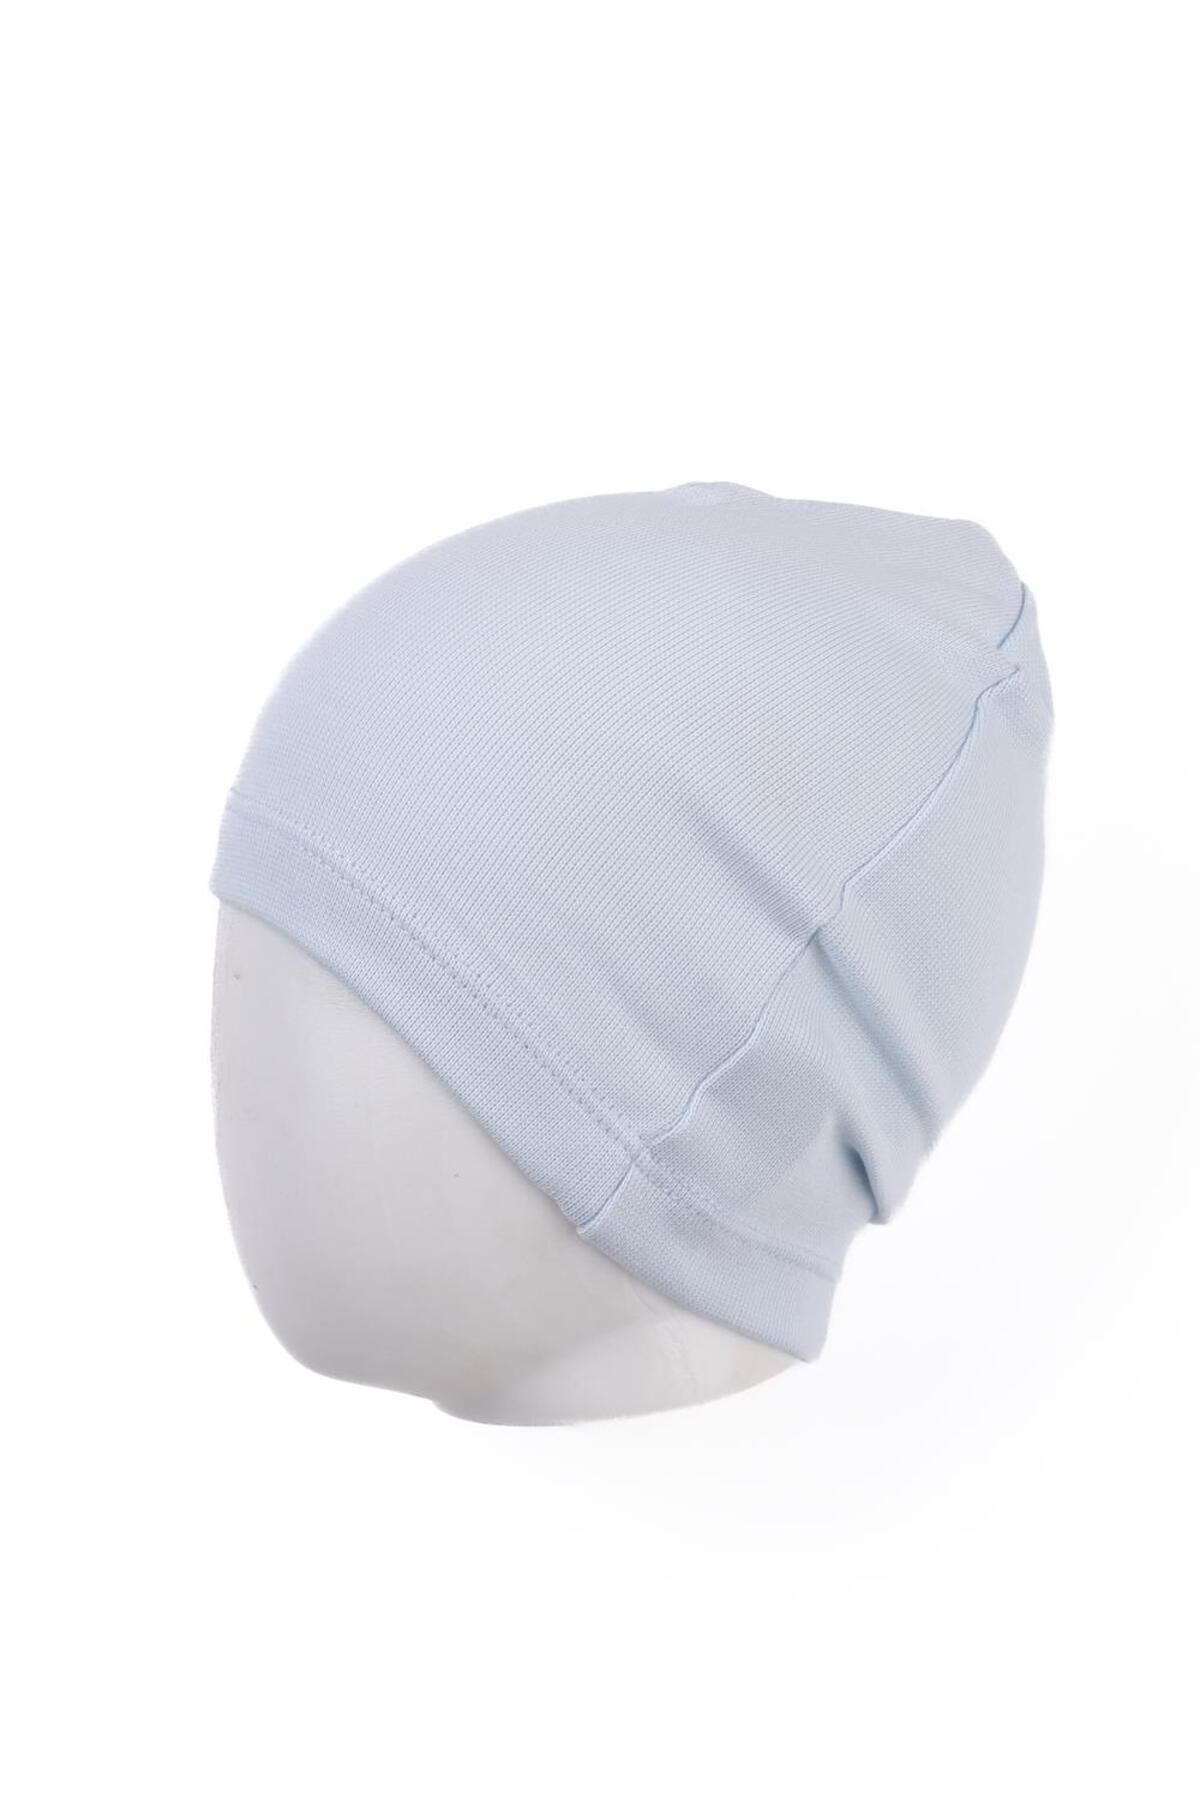 Mini Ropa Mavi 12-24 Ay Bebek Çocuk Mevsimlik Penye Şapka Bere